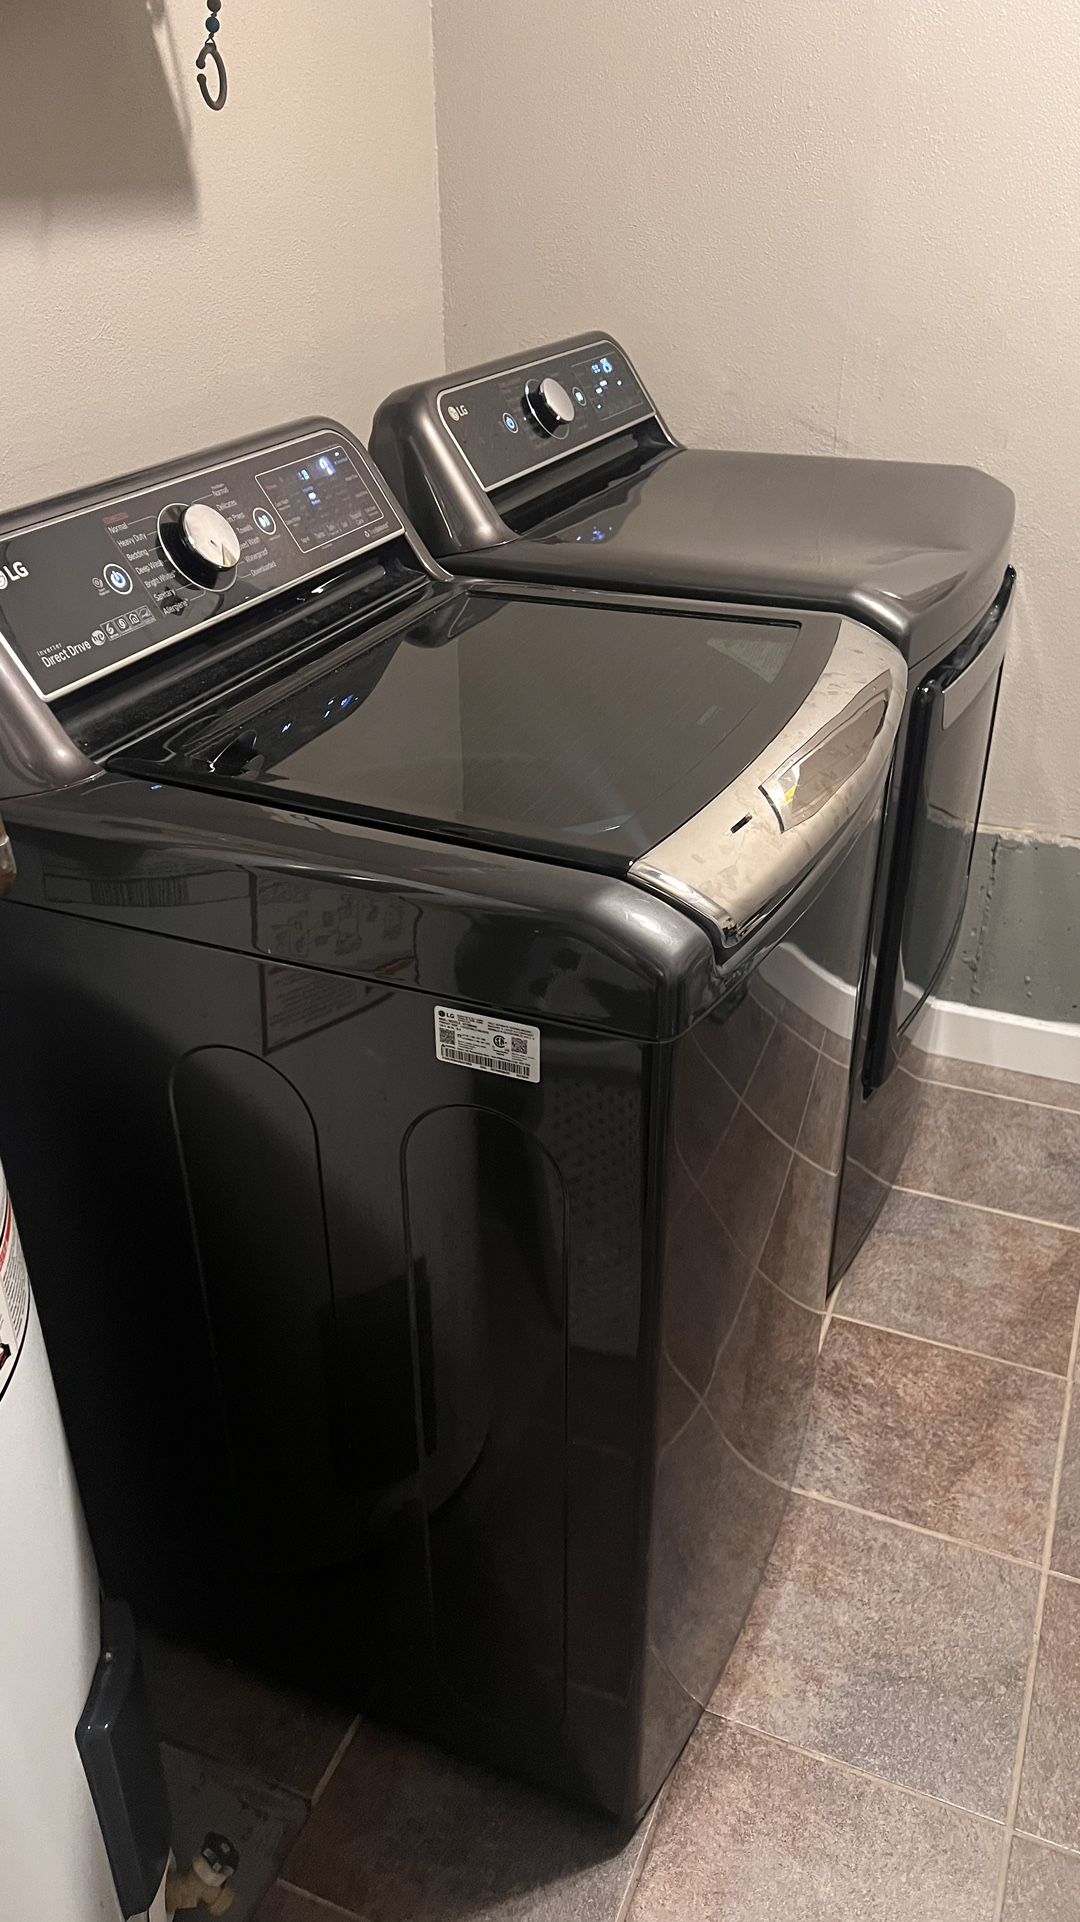 LG Washer & Electric Dryer Set